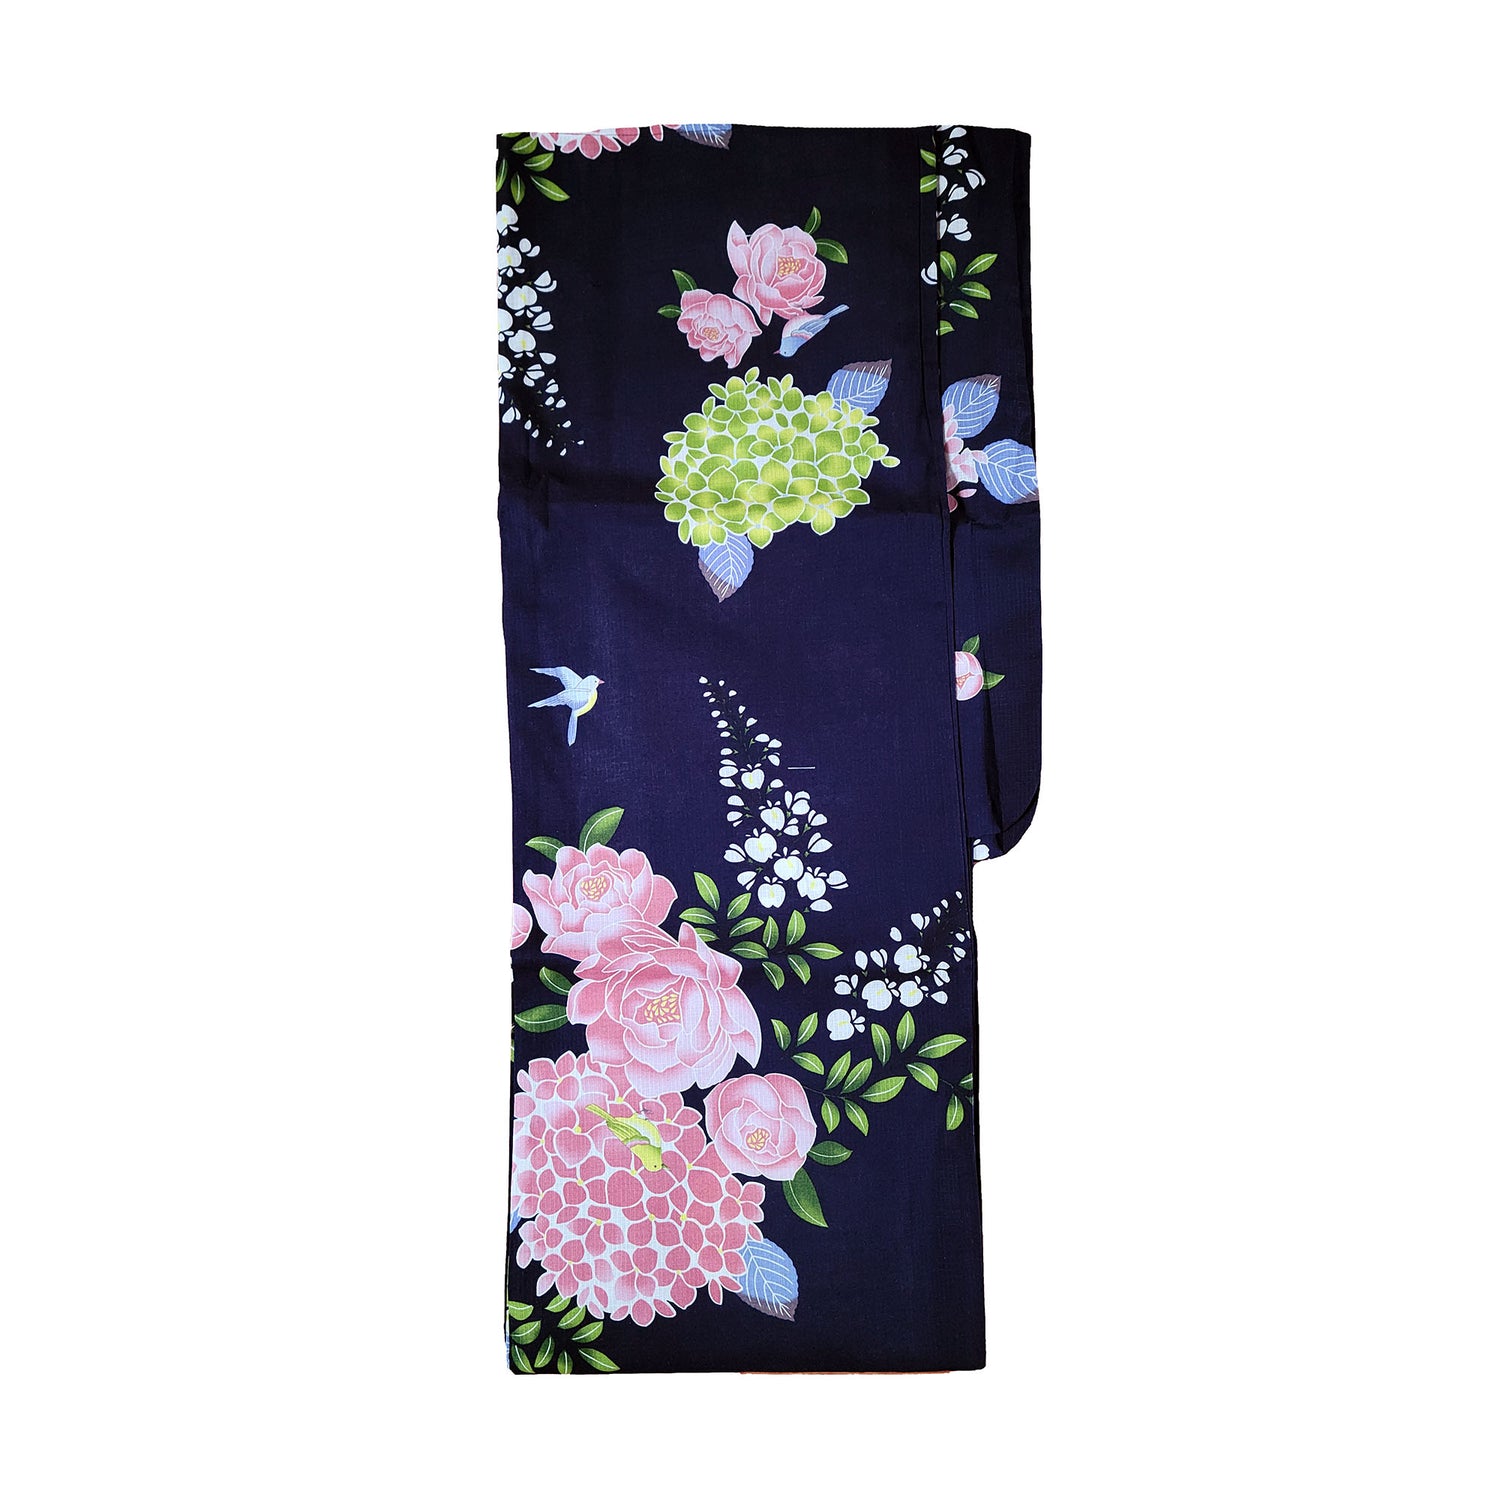 Japanese Yukata Kimono - Spring Flowers and Birds in Navy Blue